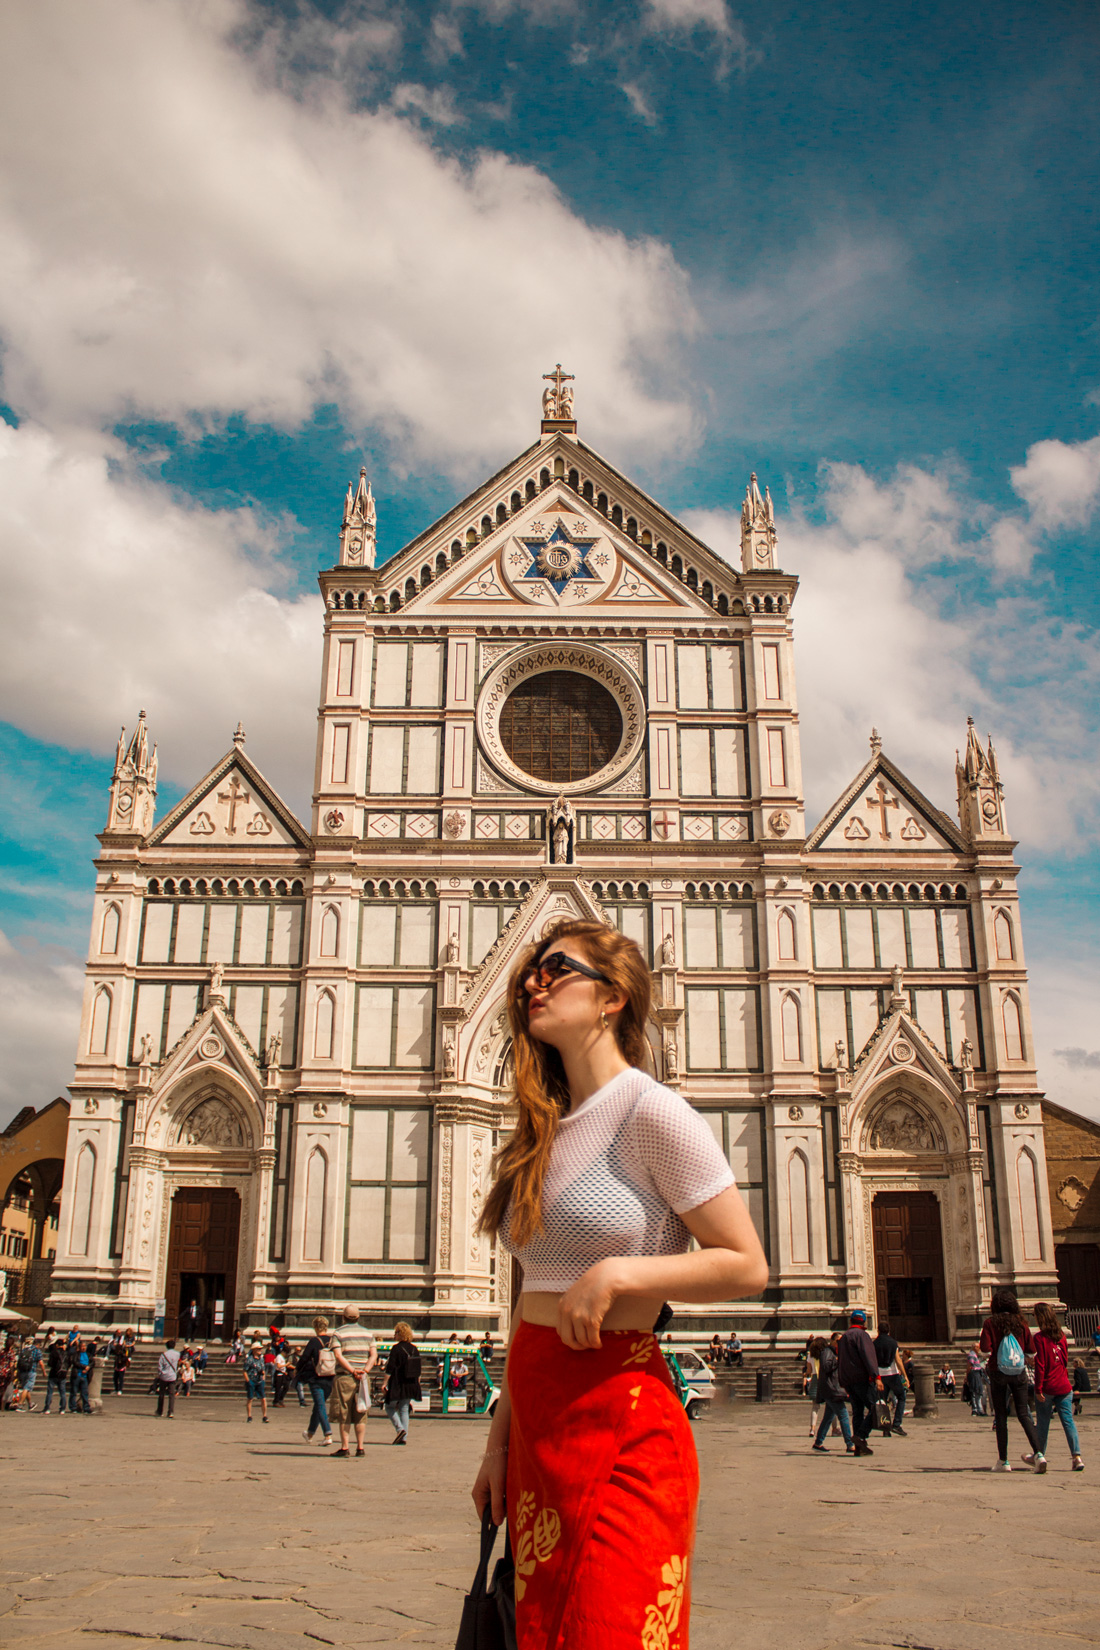 What to see in Florence- Qué ver en Florencia: Basilica di Santa Croce - Martina Lubian